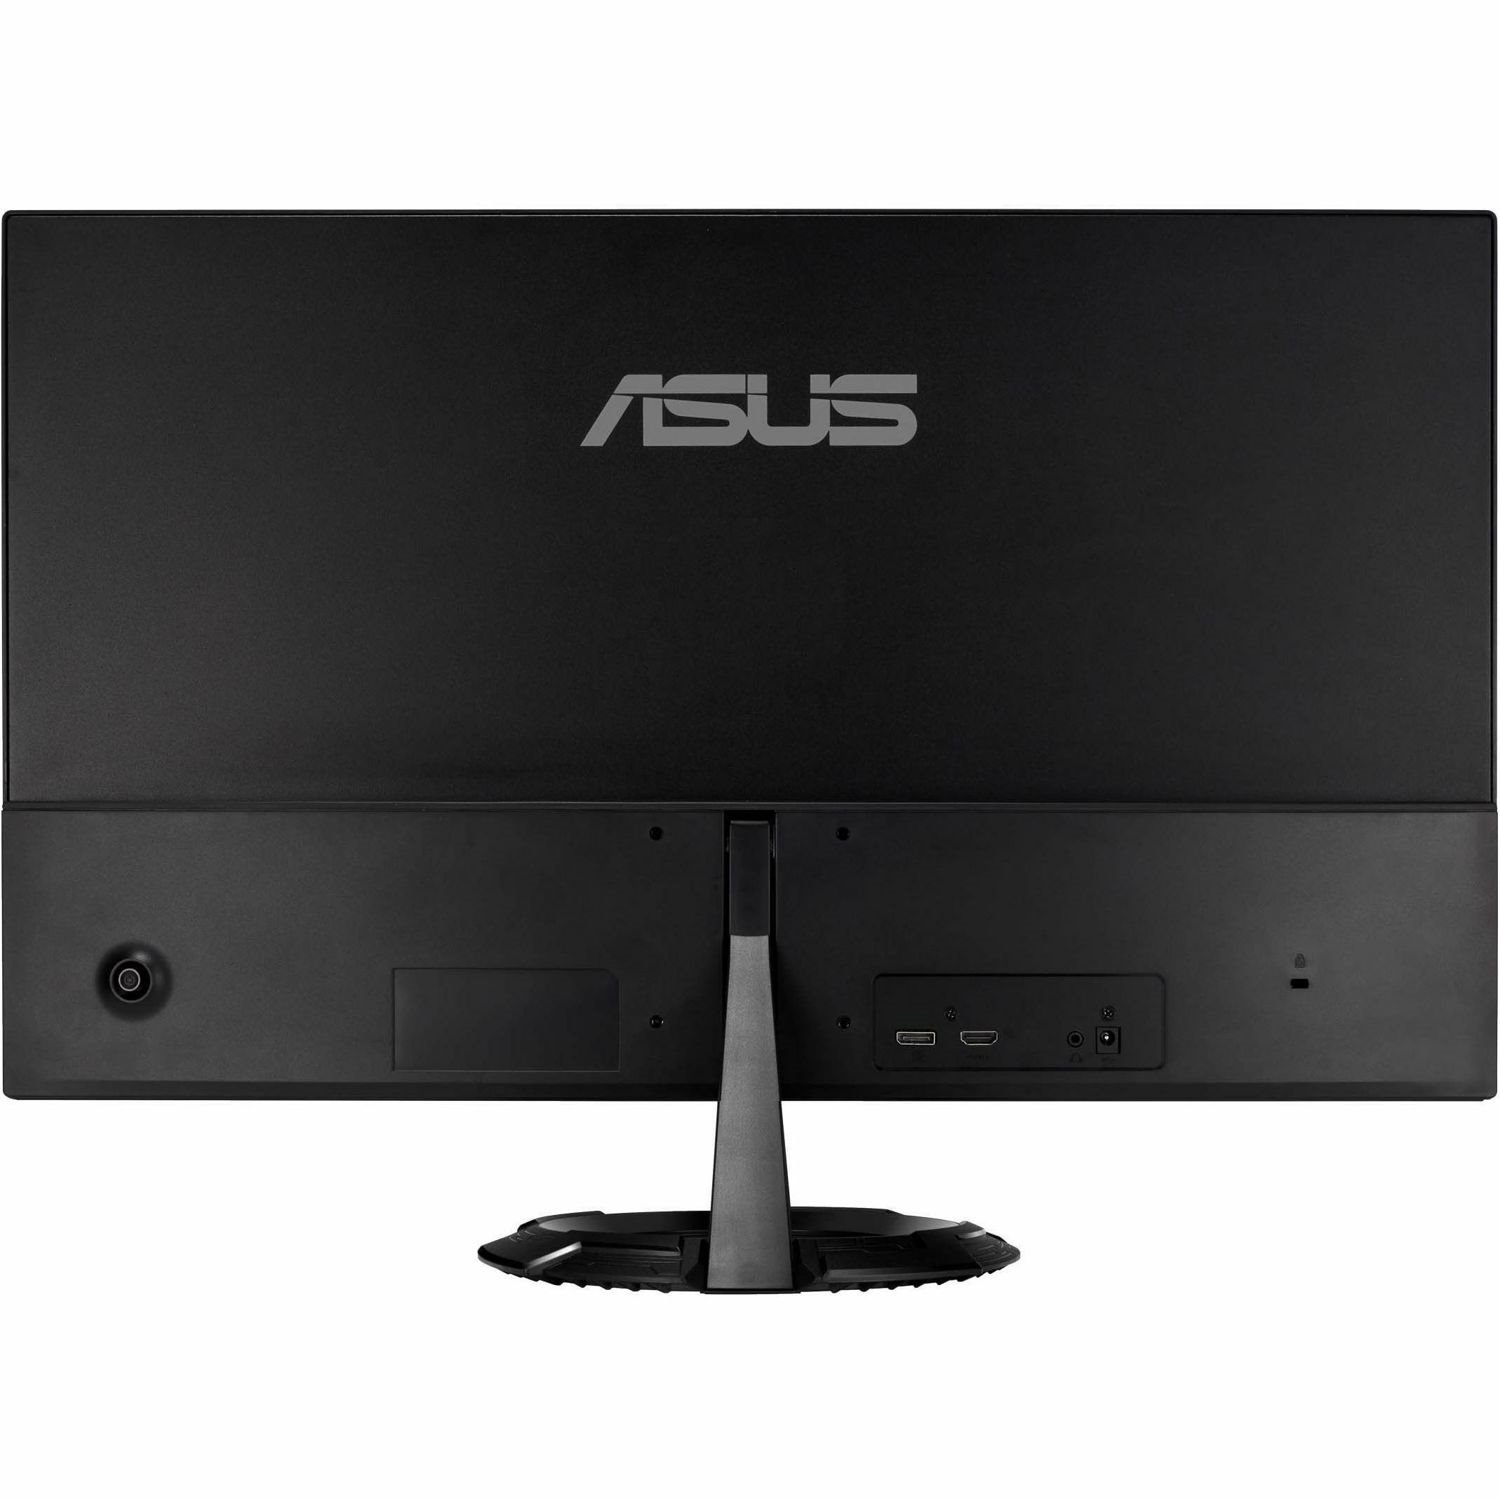 Asus VZ279QG1R 27" Class Full HD Gaming LED Monitor - 16:9